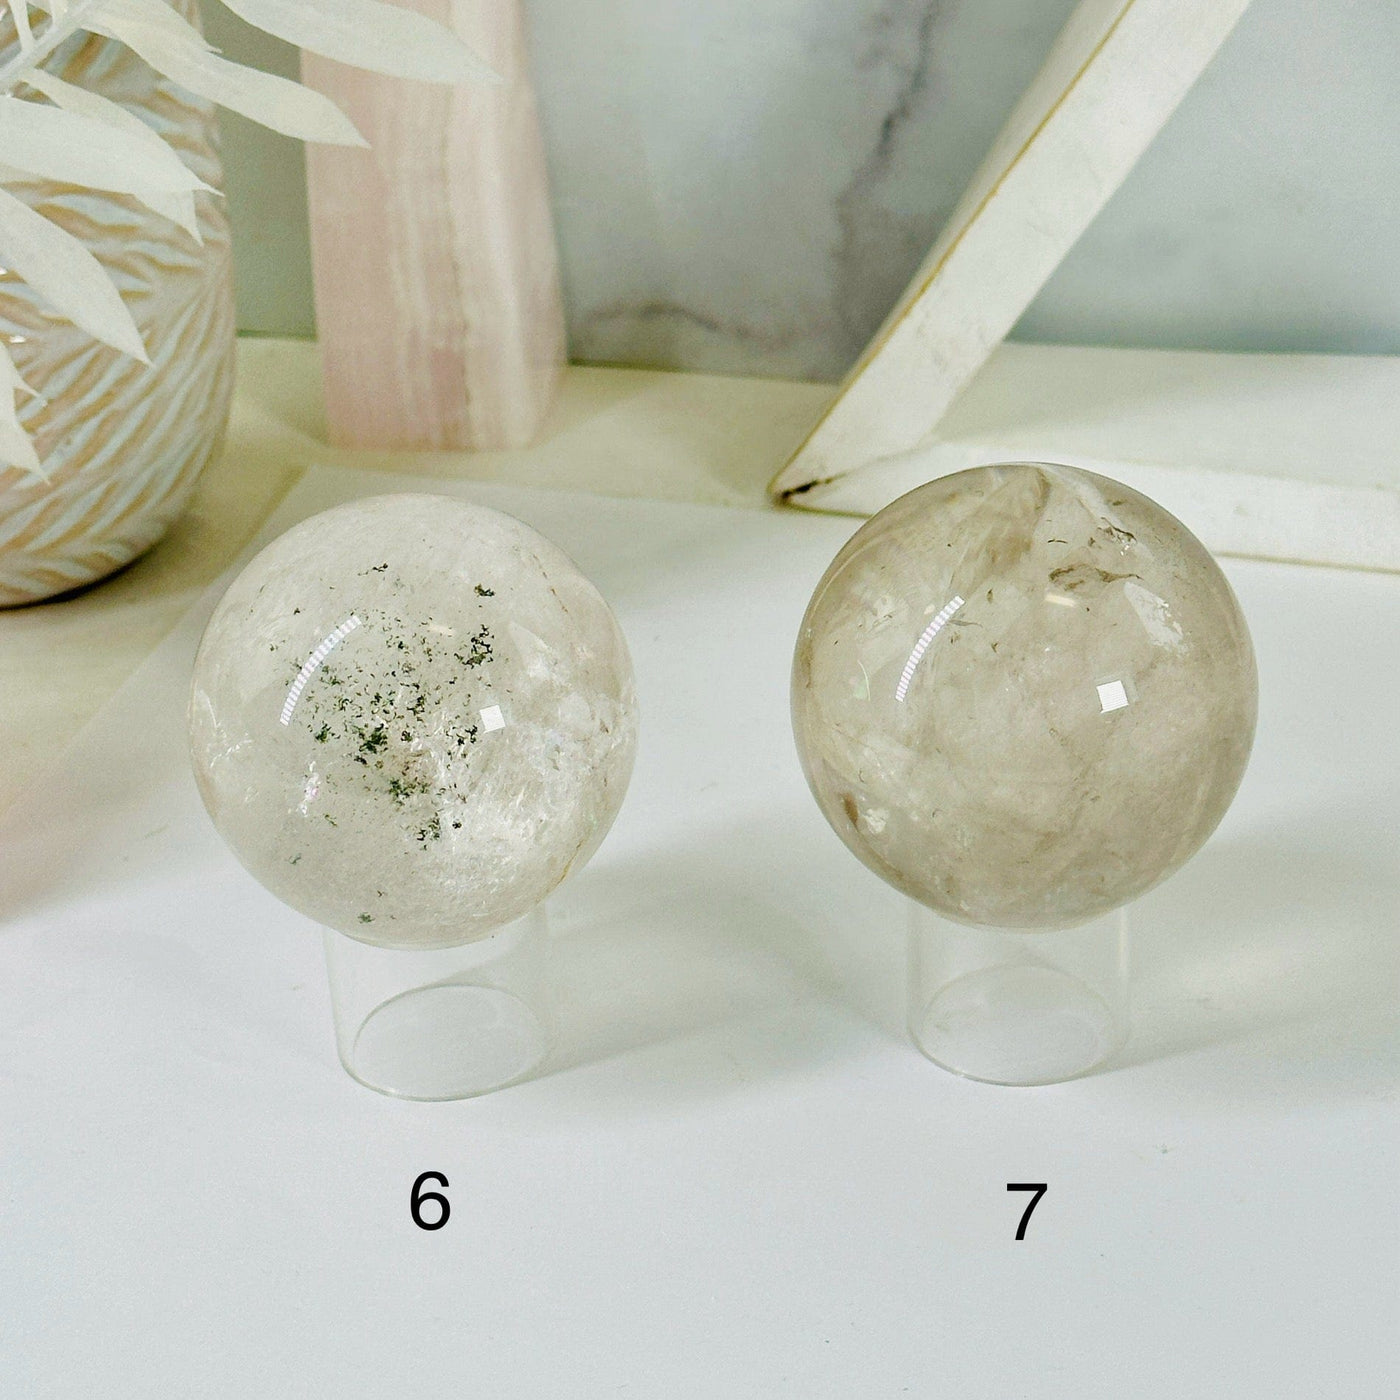 Crystal Quartz Sphere - Crystal Ball - You Choose variants 6 7 labeled